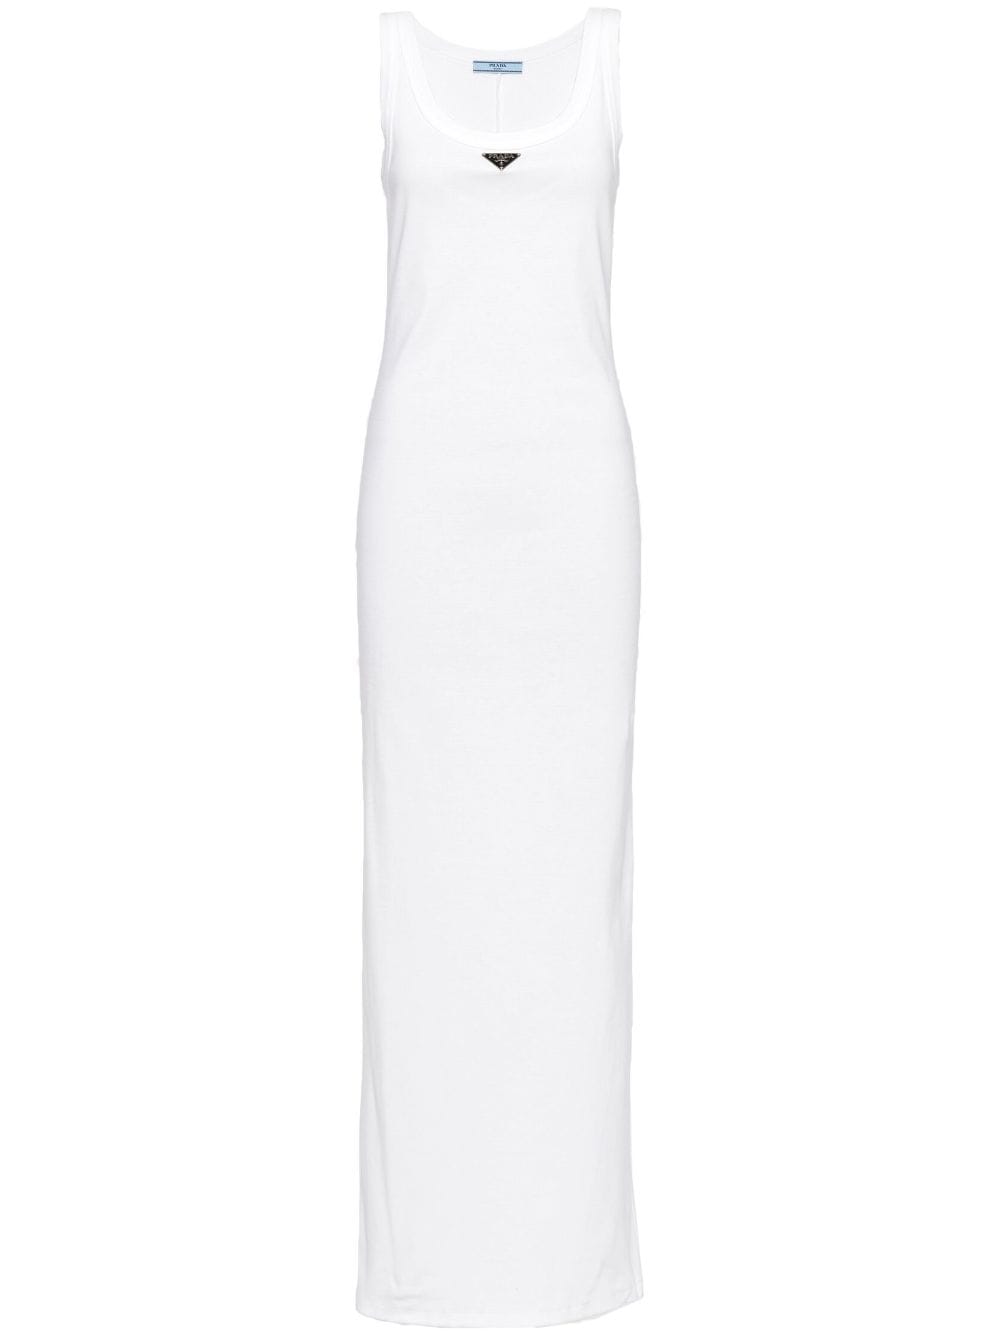 Prada logo-plaque sleeveless dress - White